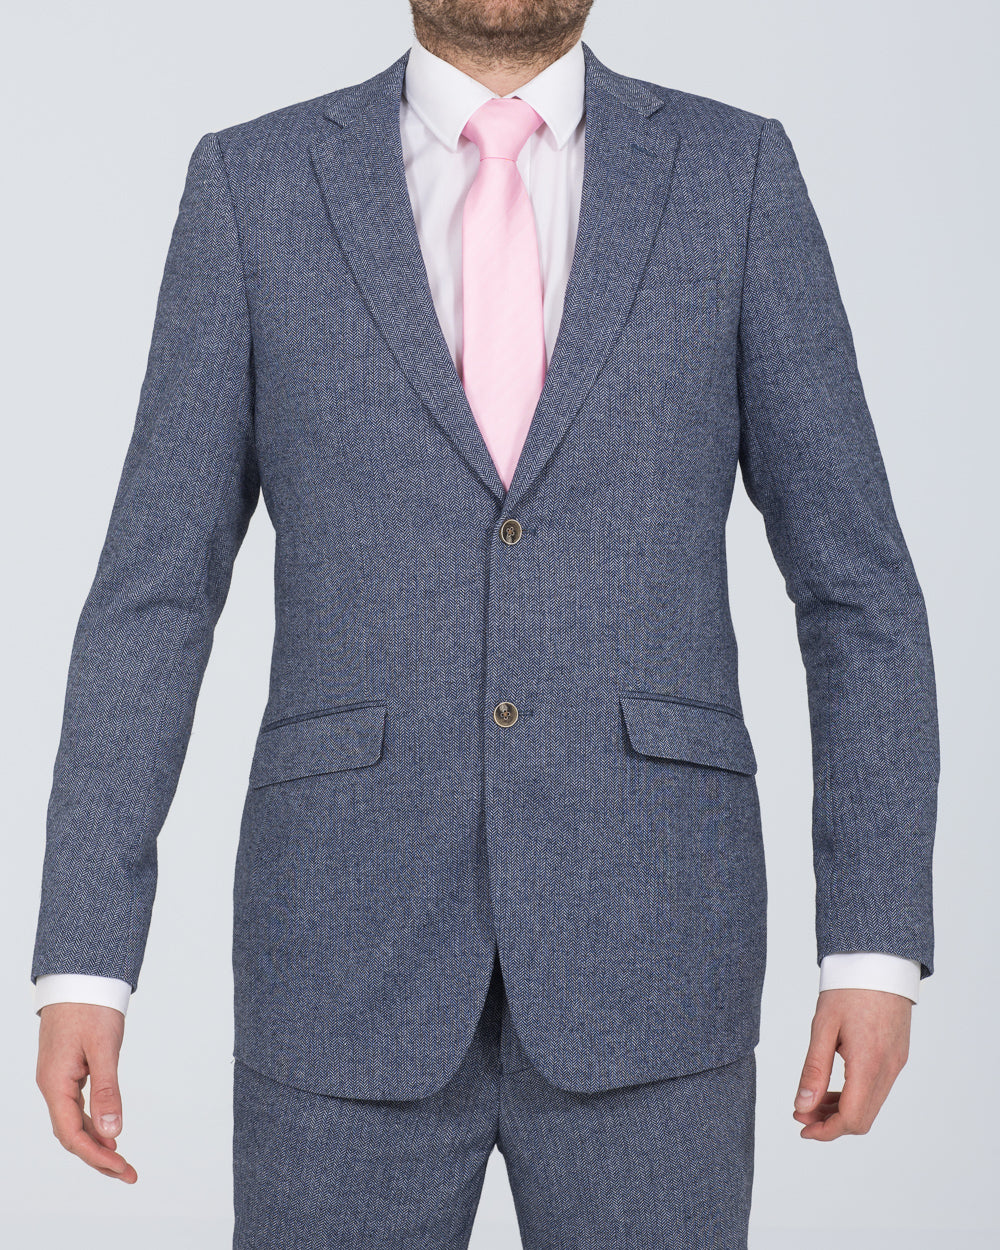 Skopes Slim Fit Tall Suit Jacket (blue herringbone)